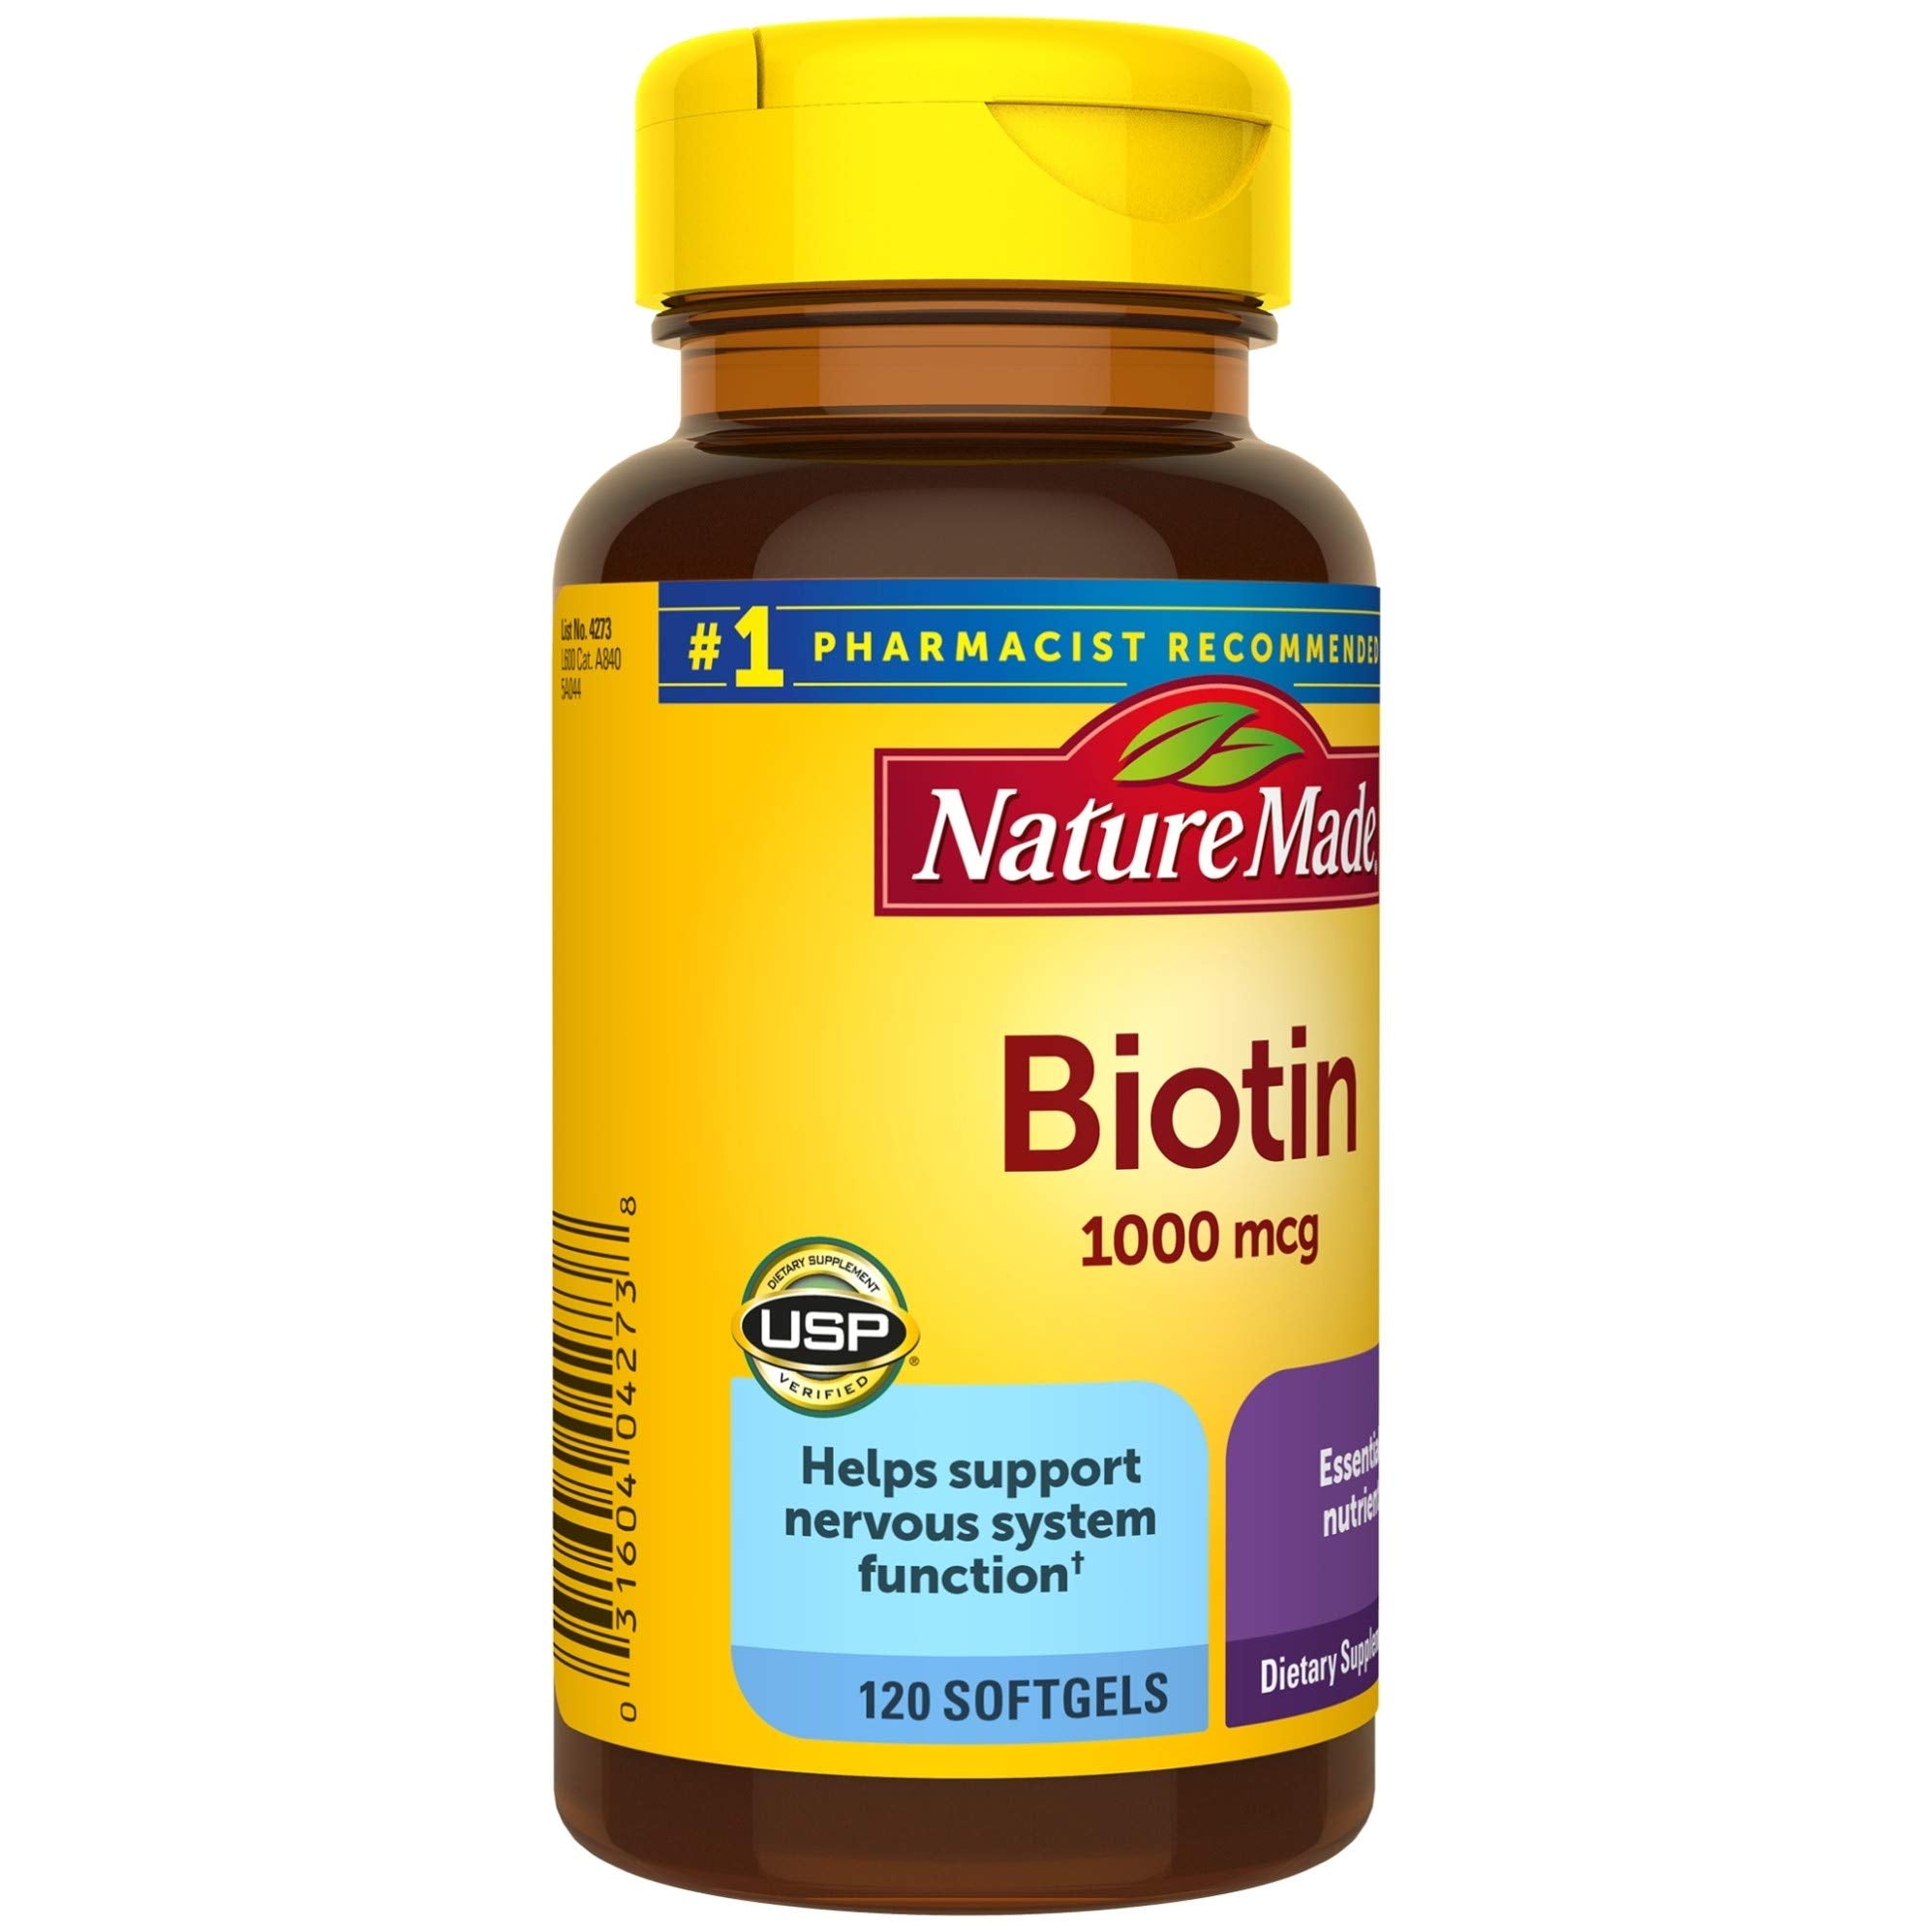 Nature Made Biotin 1000 mcg Dietary Supplement - 120 Softgels